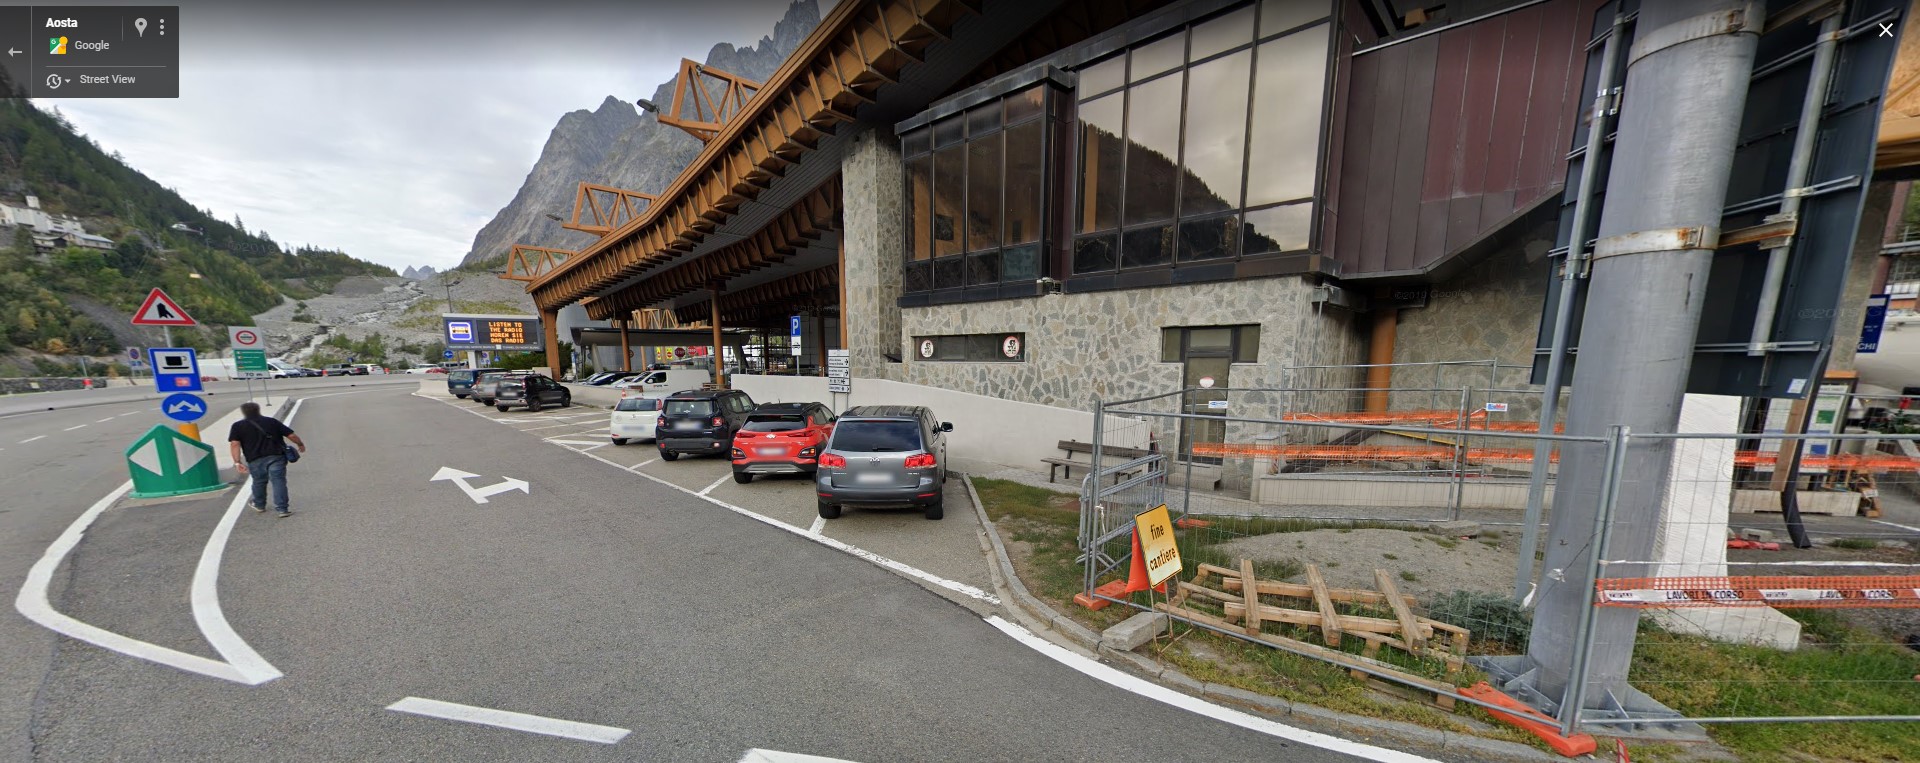 Google_Streetview_Mont_Blanc_tunnel_compare.jpg